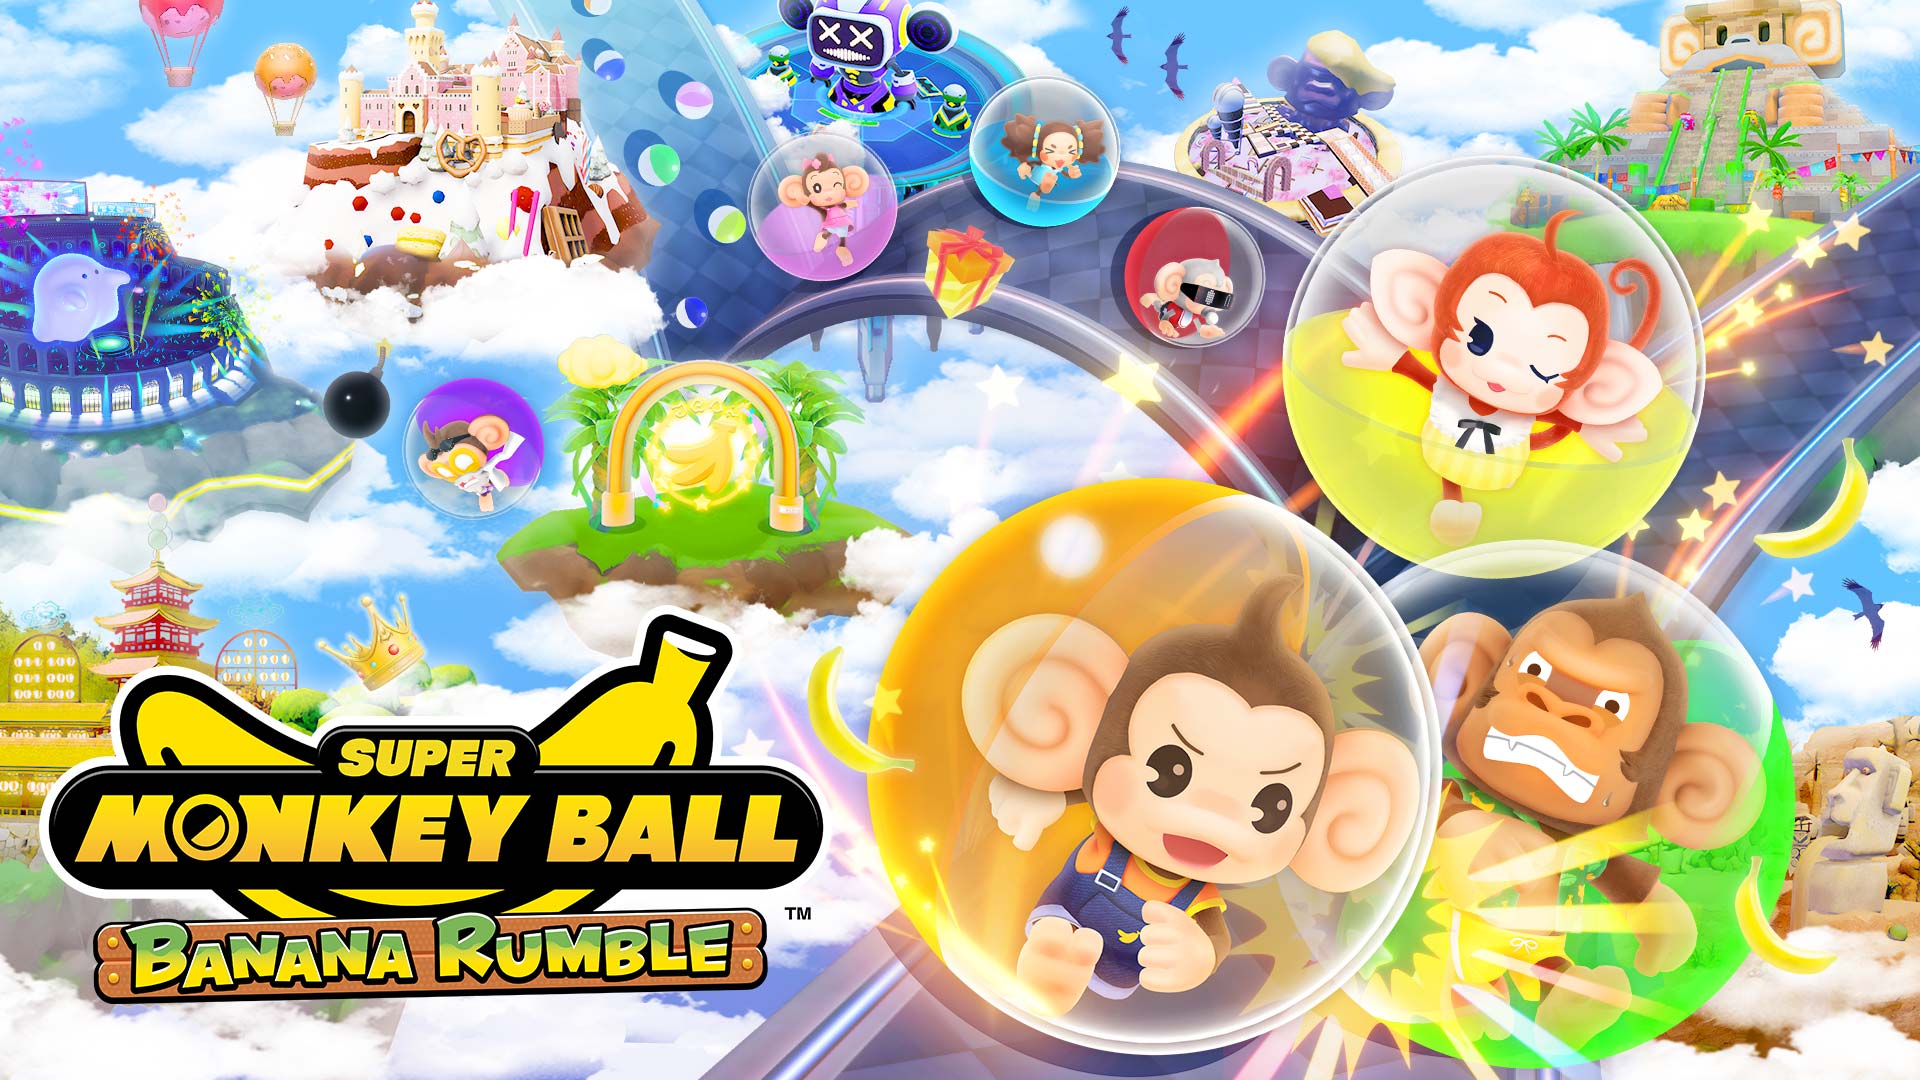 The key art for Super Monkey Ball Banana Rumble